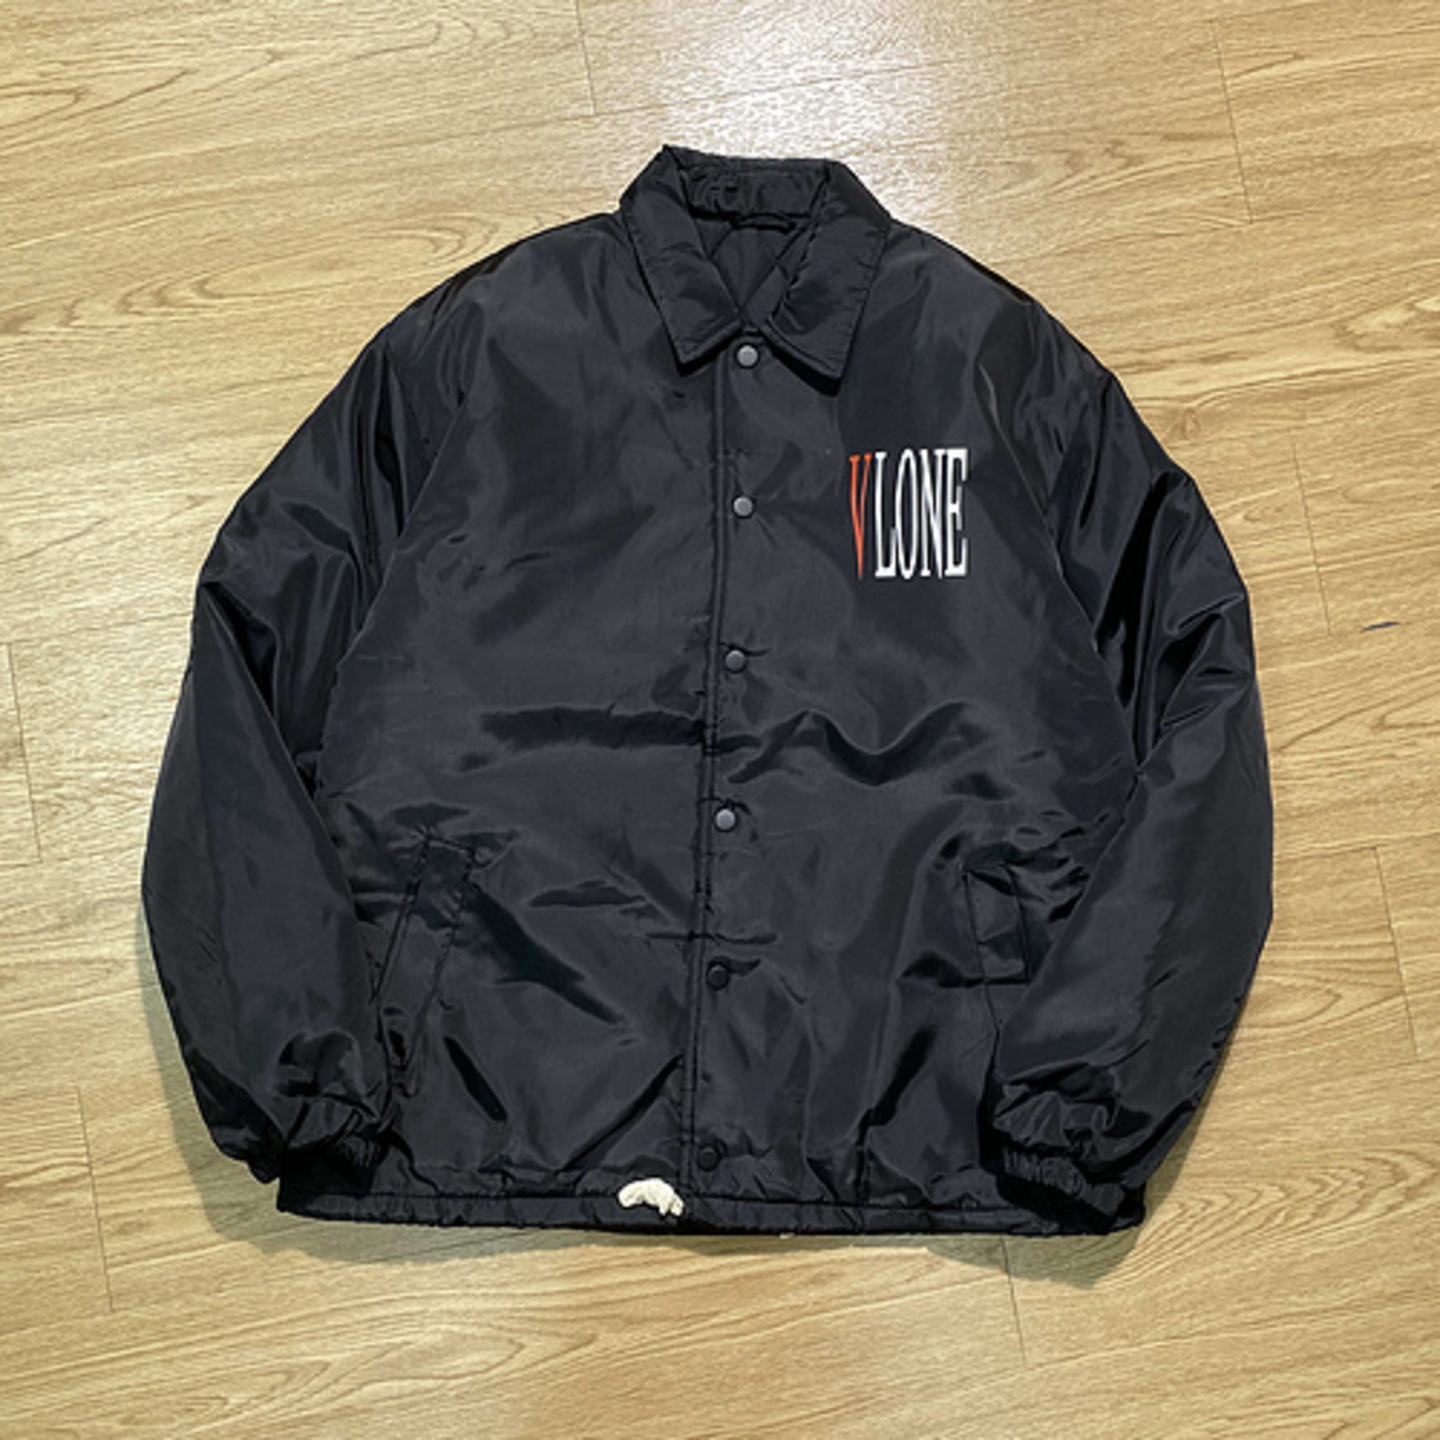  VLONE Cotton jacket